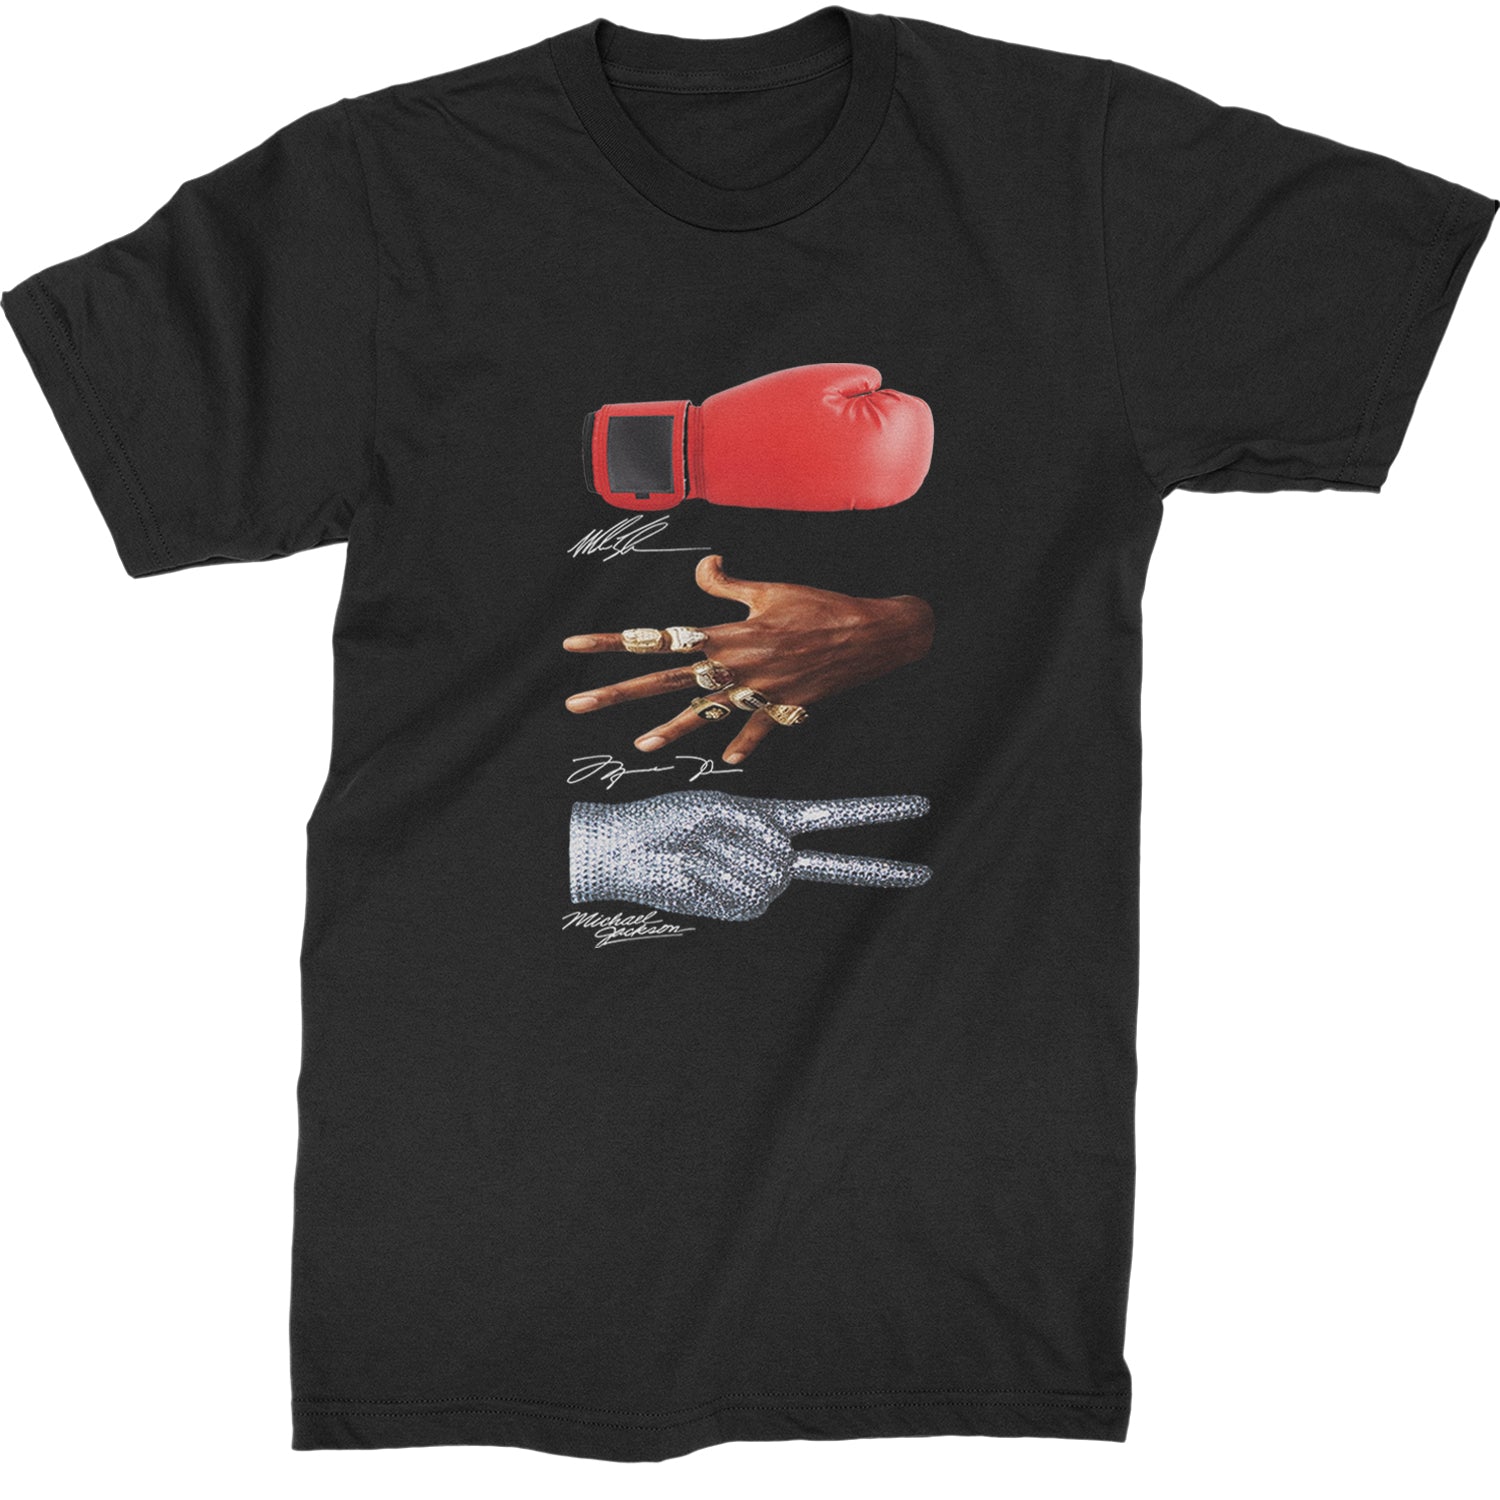 Tyson Jordan Jackson Iconic Michaels Mens T-shirt Black